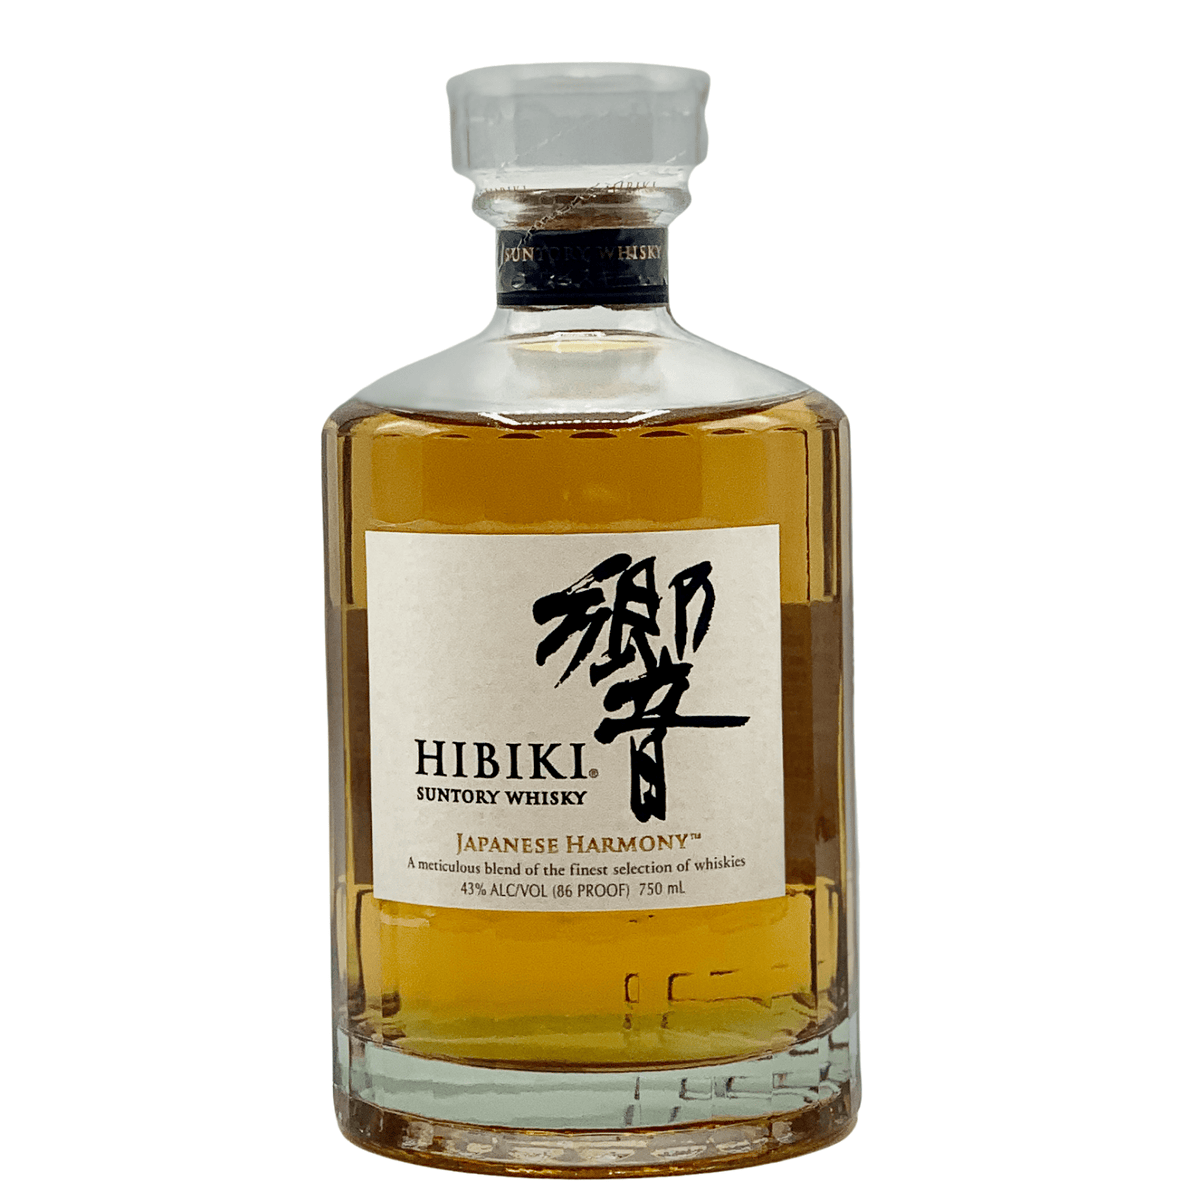 Hibiki Suntory Whisky *  Amstein SA - L'ambassadeur de la bière